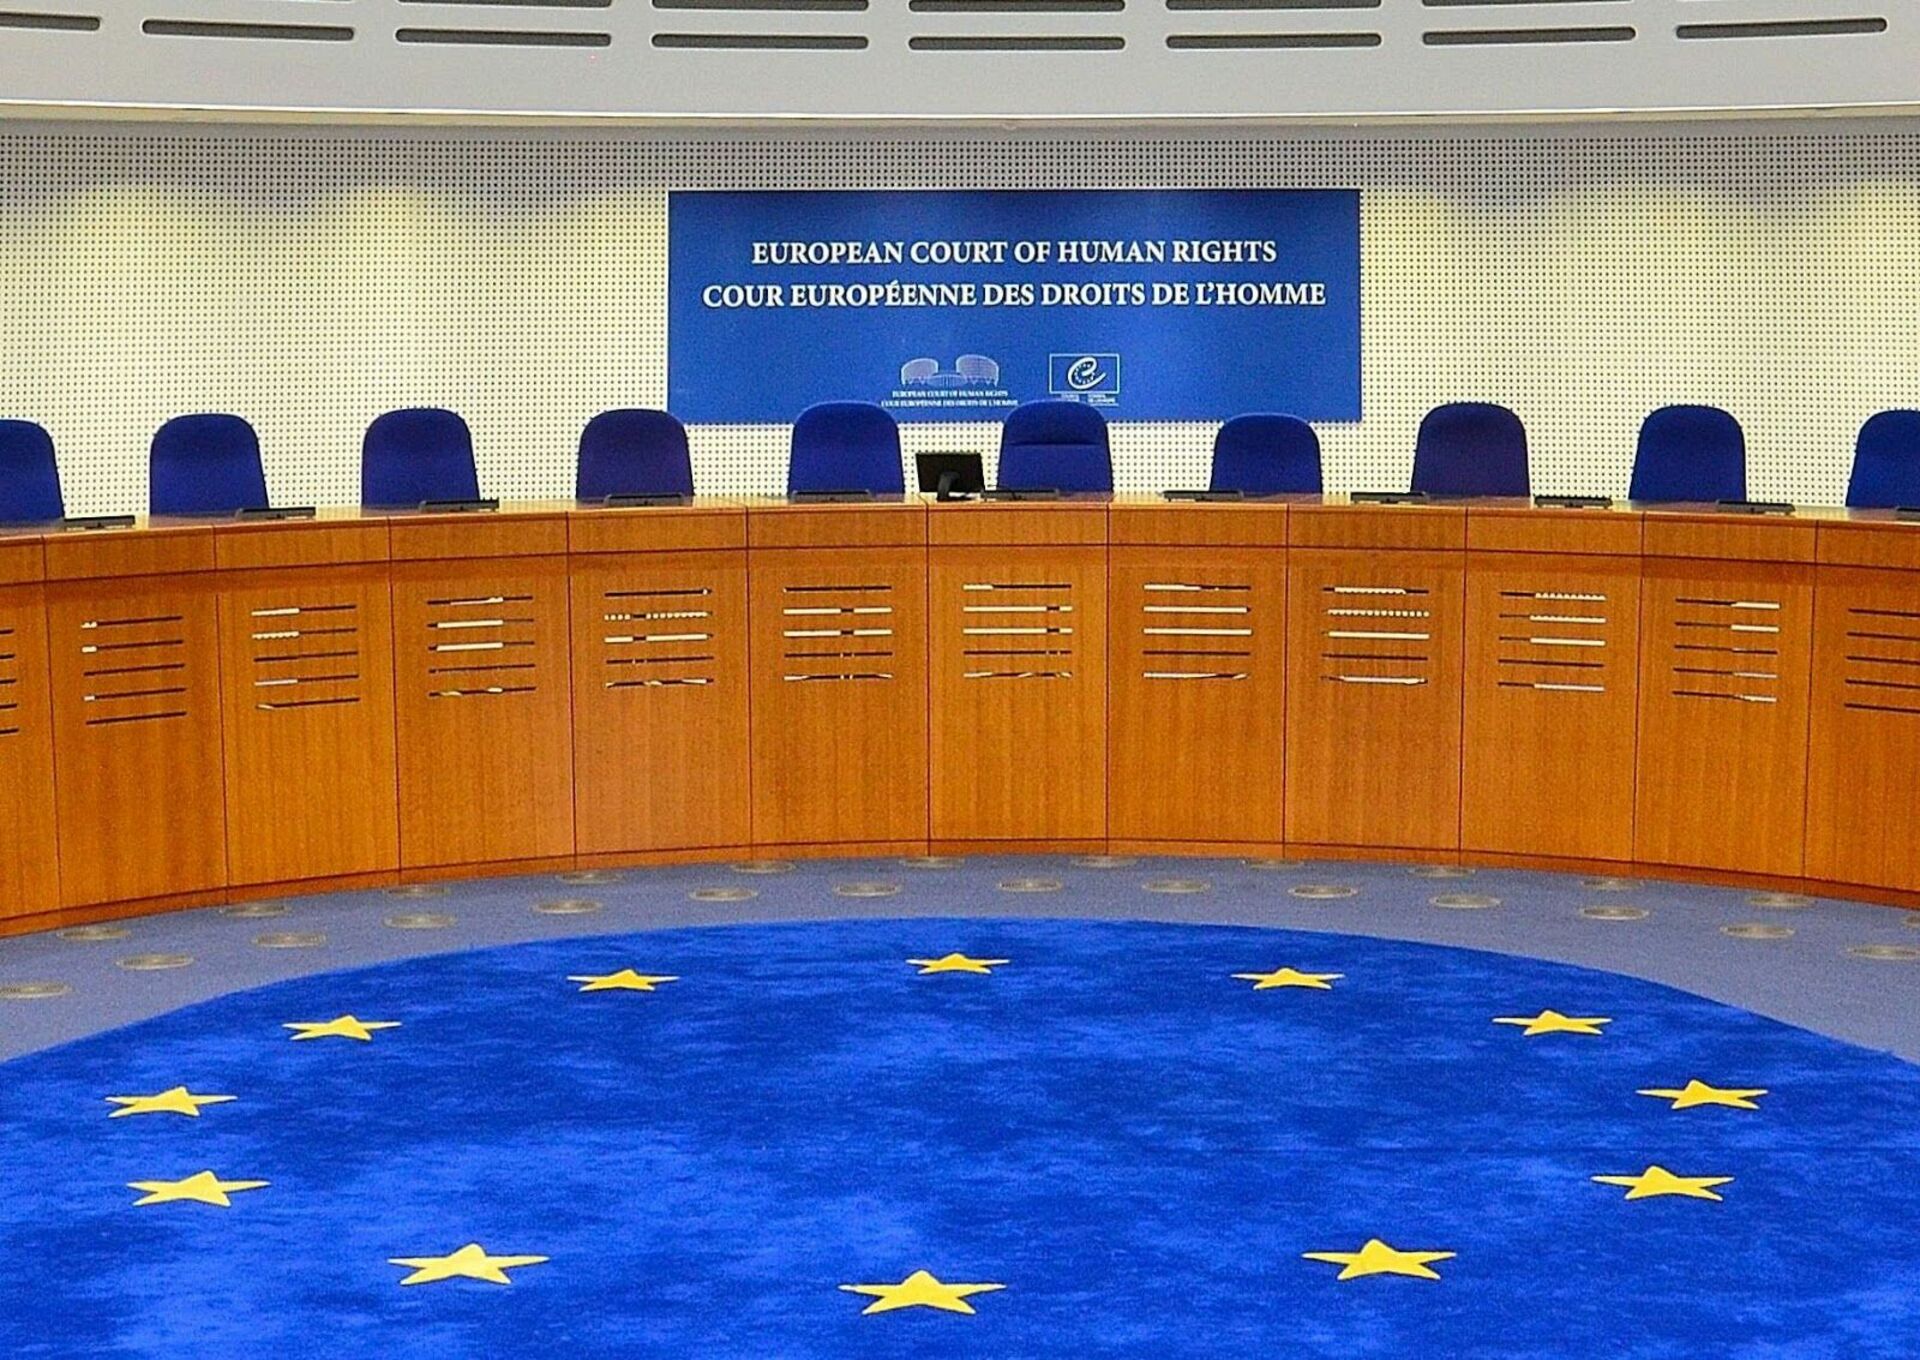 Европейский суд по правам человека рф. Европейский суд по правам человека (ЕСПЧ). Суд по правам человека в Страсбурге. Европейский суд по правам человека судьи. Европейский суд по правам человека внутри.